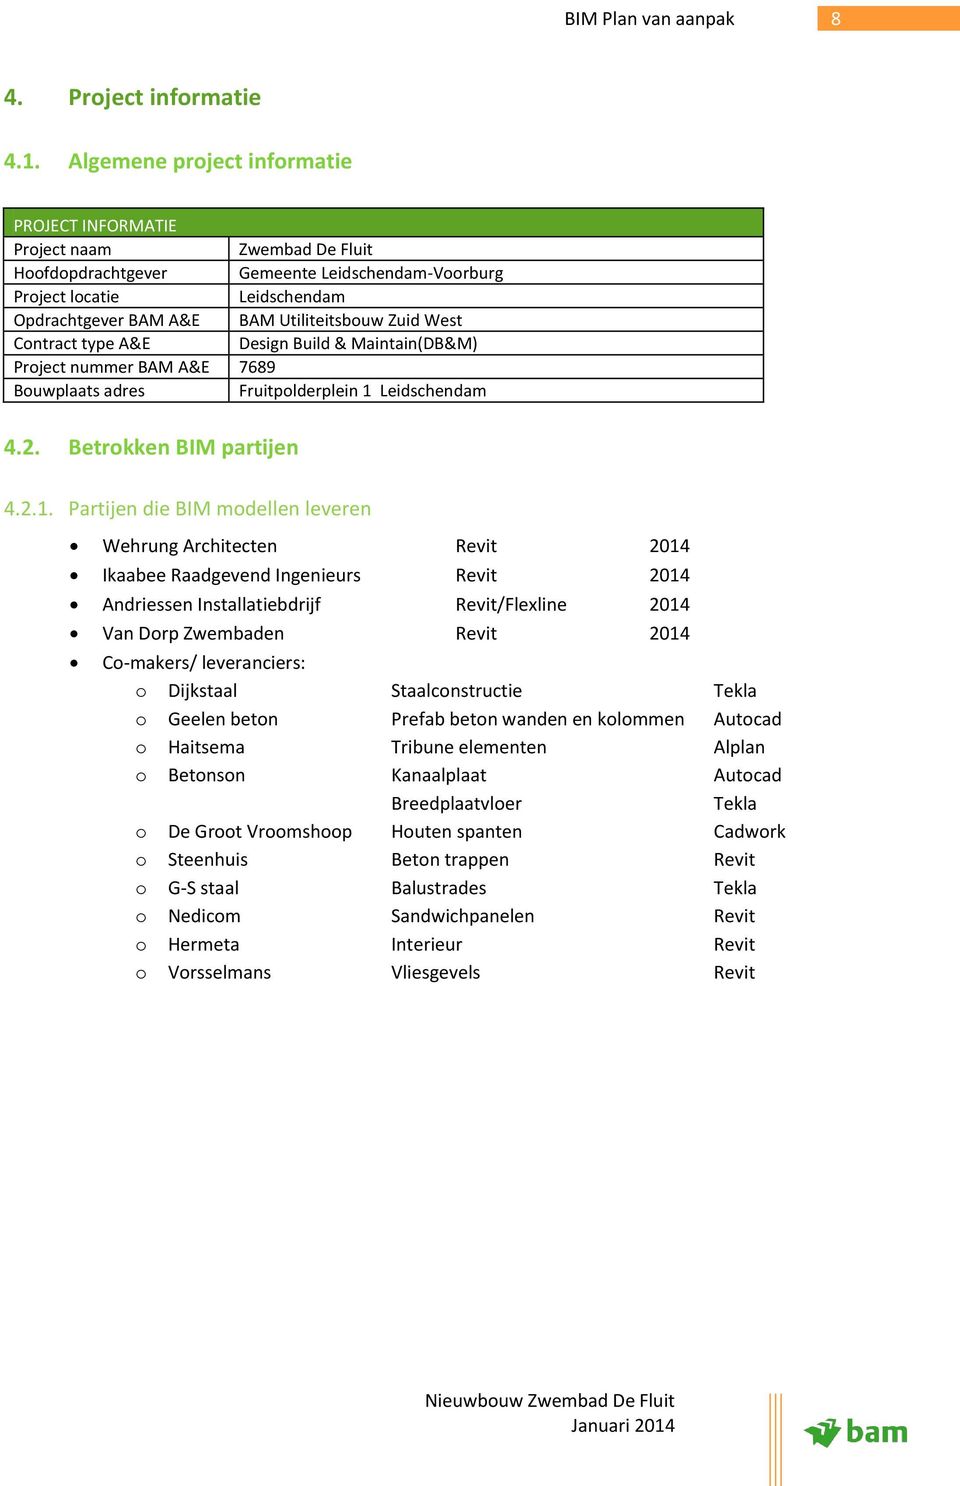 Zuid West Contract type A&E Design Build & Maintain(DB&M) Project nummer BAM A&E 7689 Bouwplaats adres Fruitpolderplein 1 